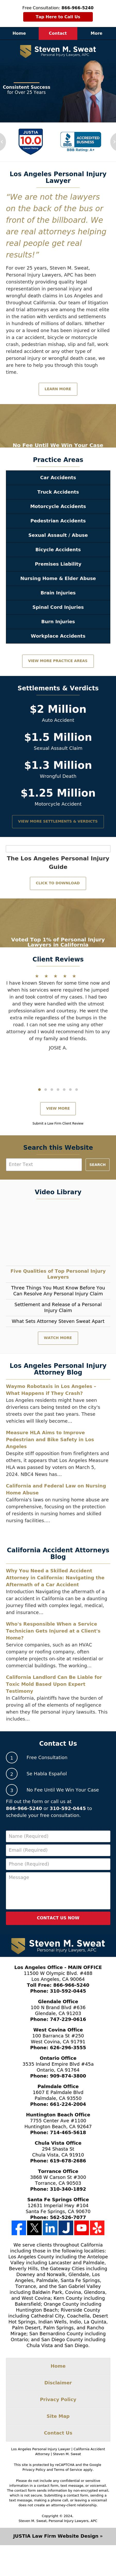 Steven M. Sweat, Personal Injury Lawyers, APC - Los Angeles CA Lawyers